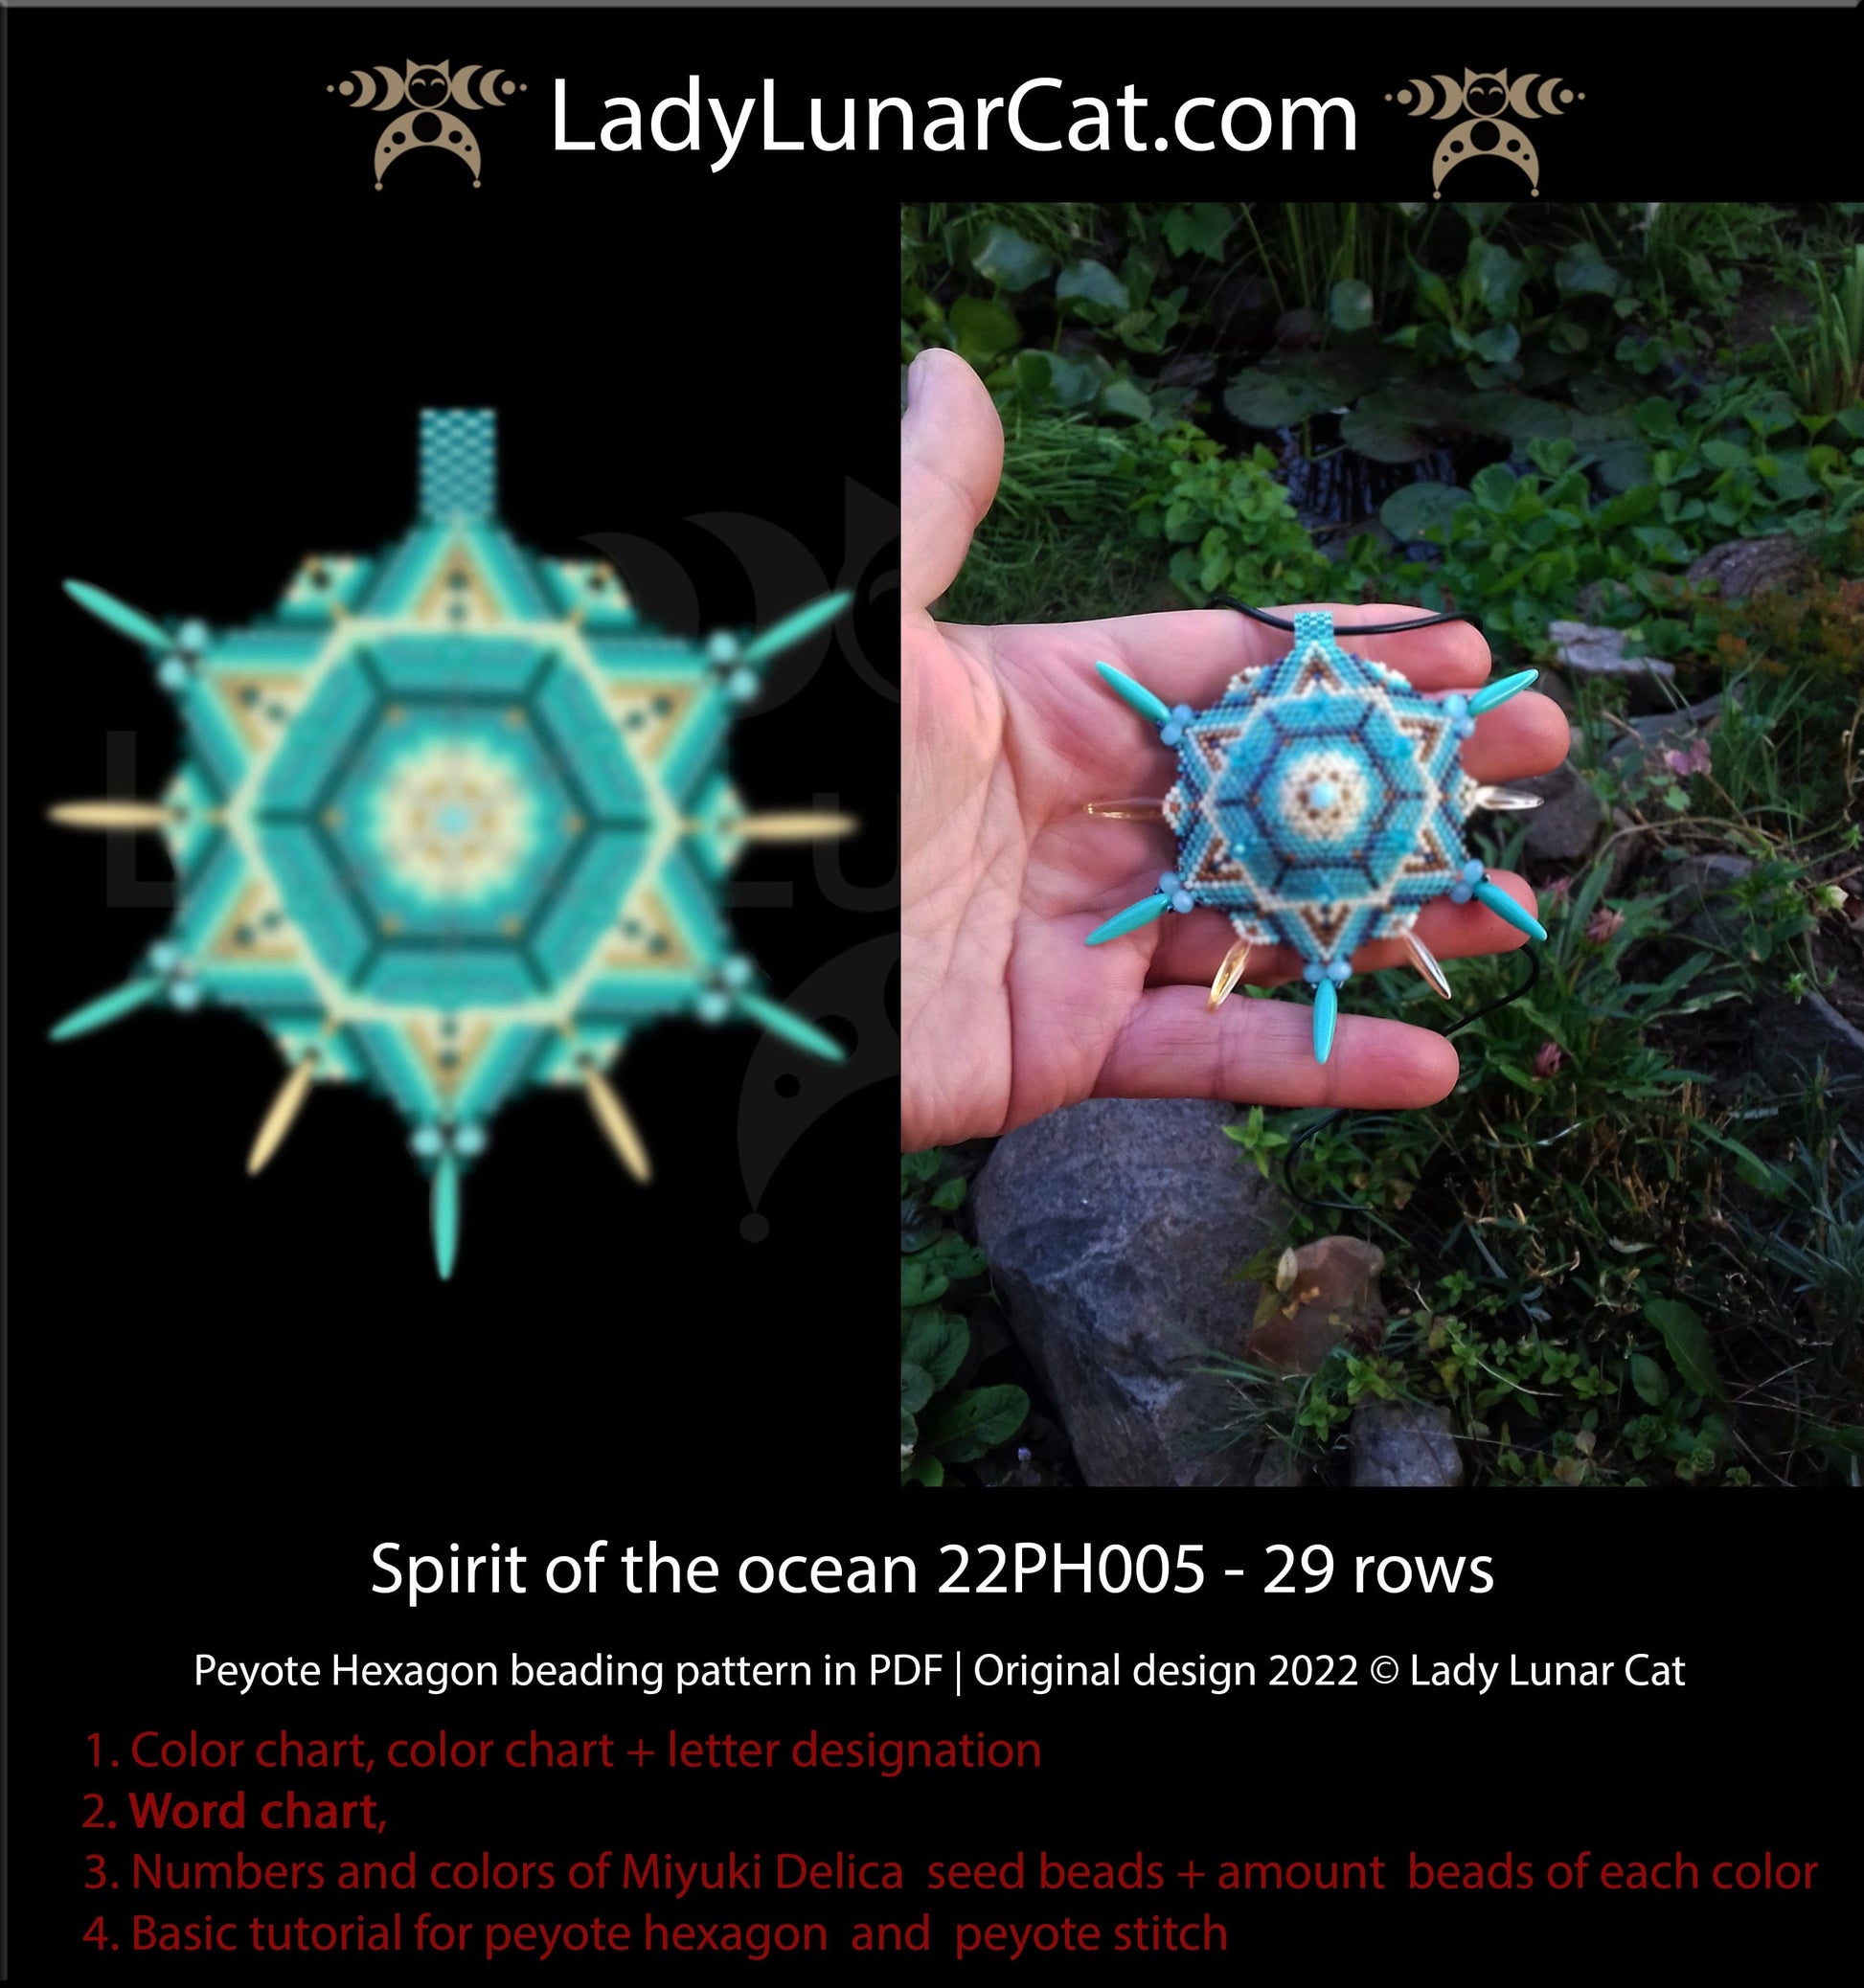 Peyote hexagon pattern for beading Spirit of the ocean 22PH005 LadyLunarCat